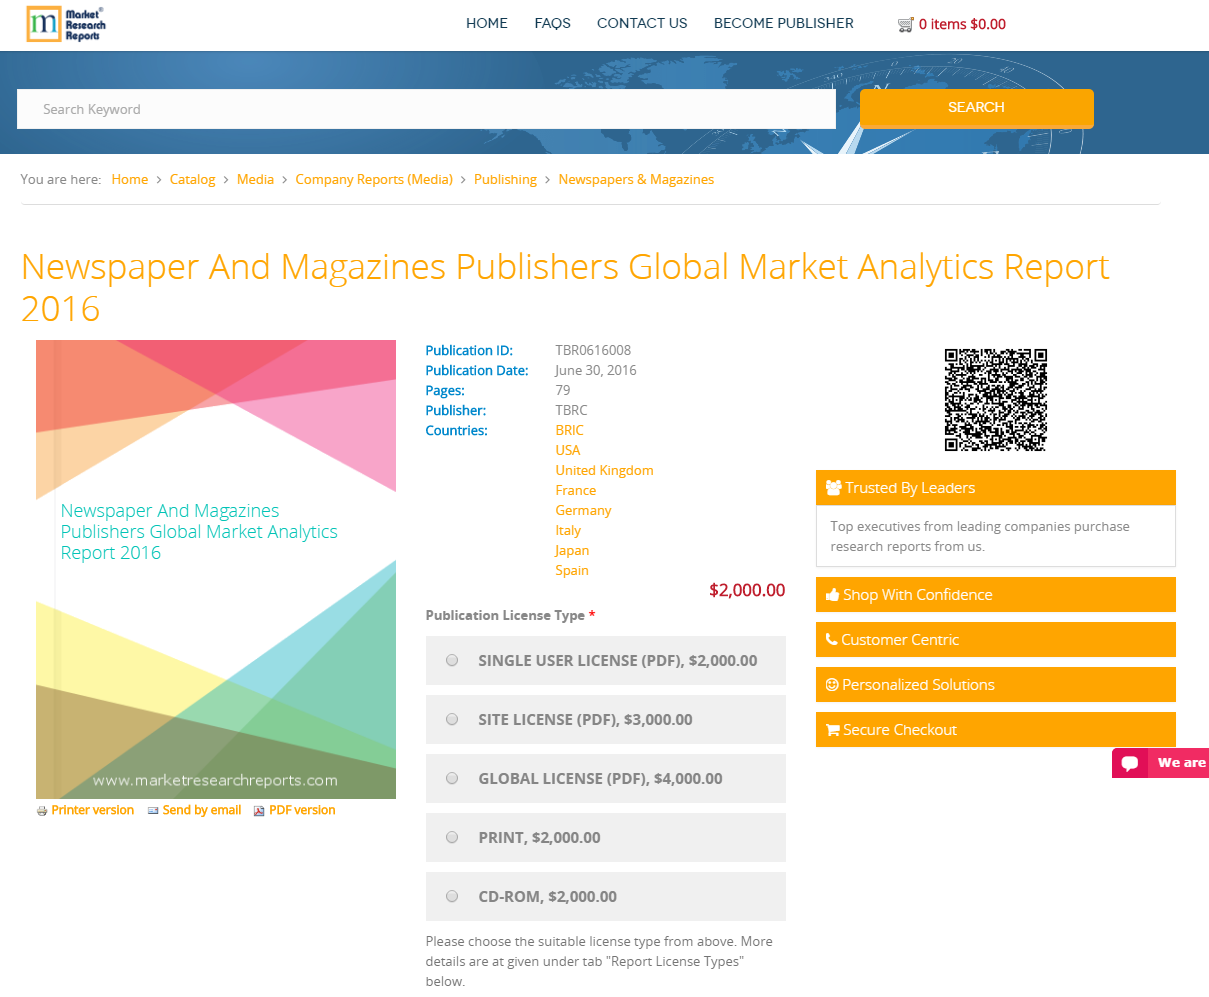 Newspaper And Magazines Publishers Global Market Analytics